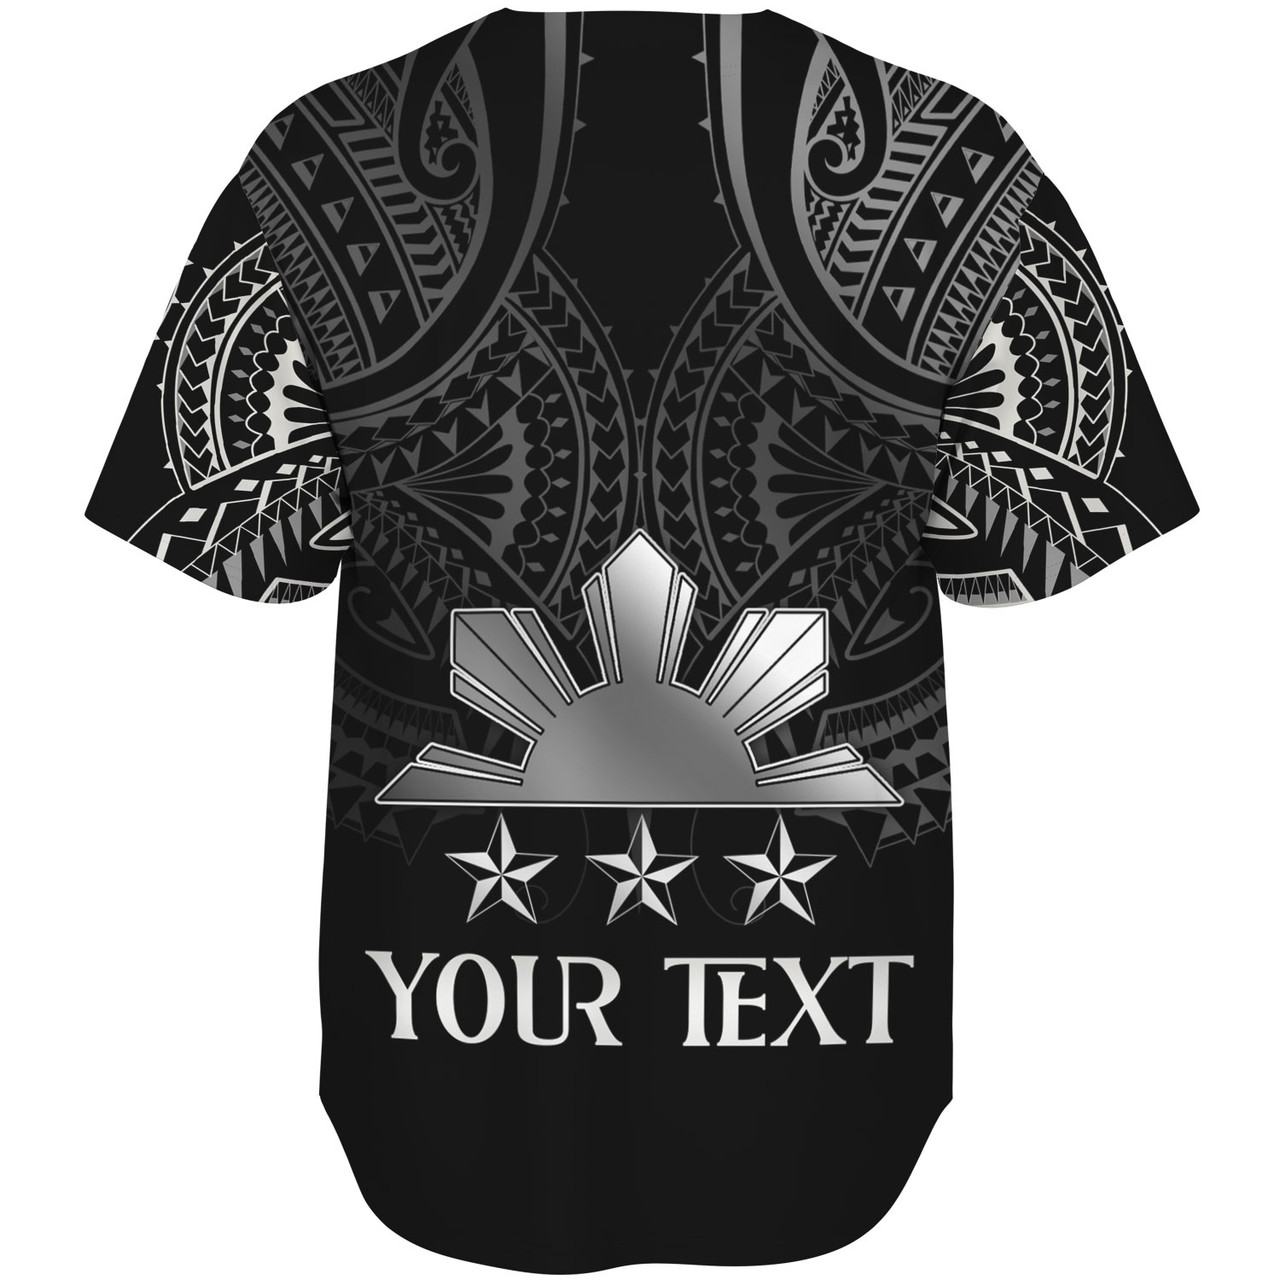 Philippines Filipinos Custom Personalised Baseball Shirt Black Sun And Stars Tribal Tatau Design